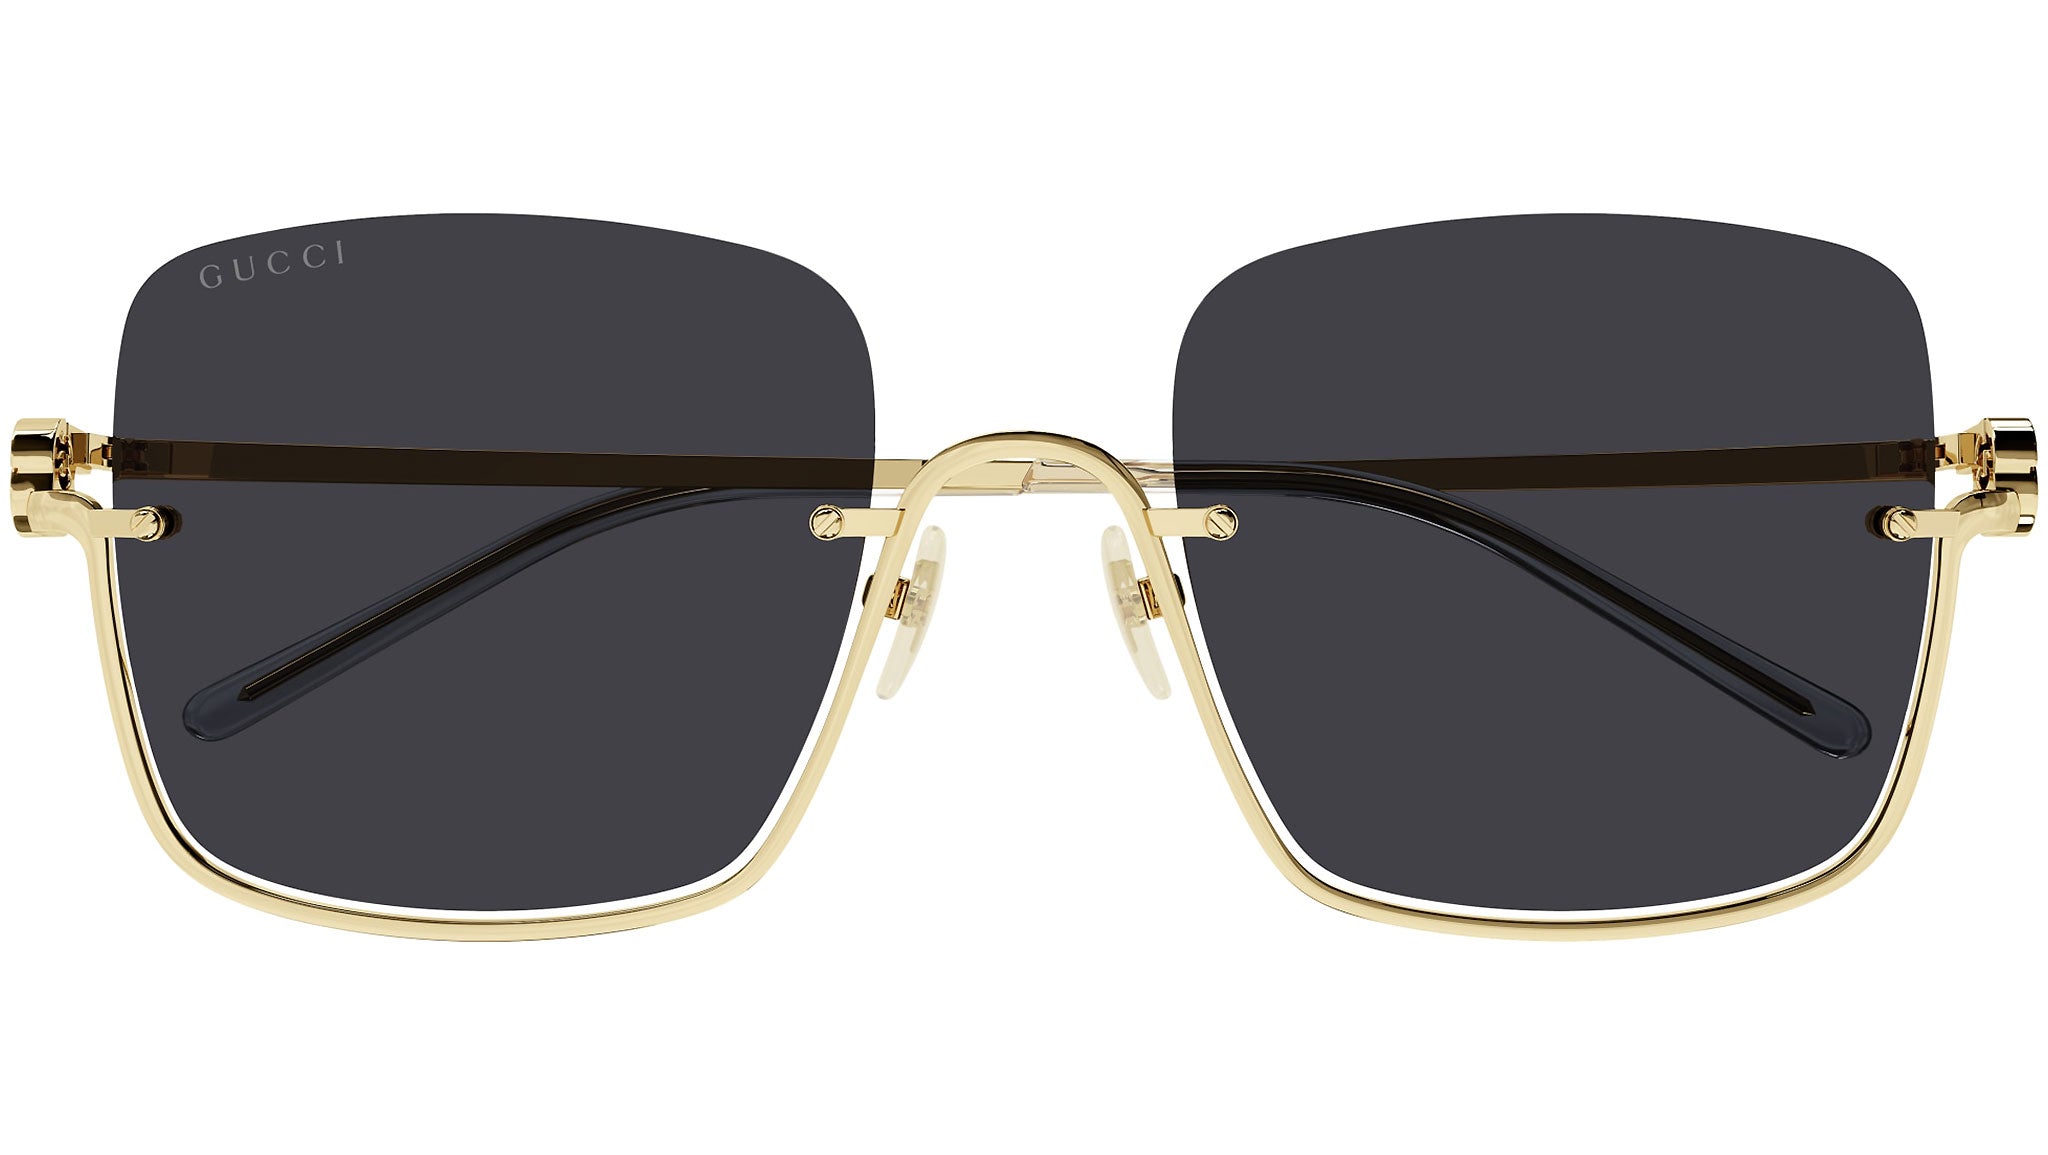 Gucci Gg1147s women Sunglasses online sale